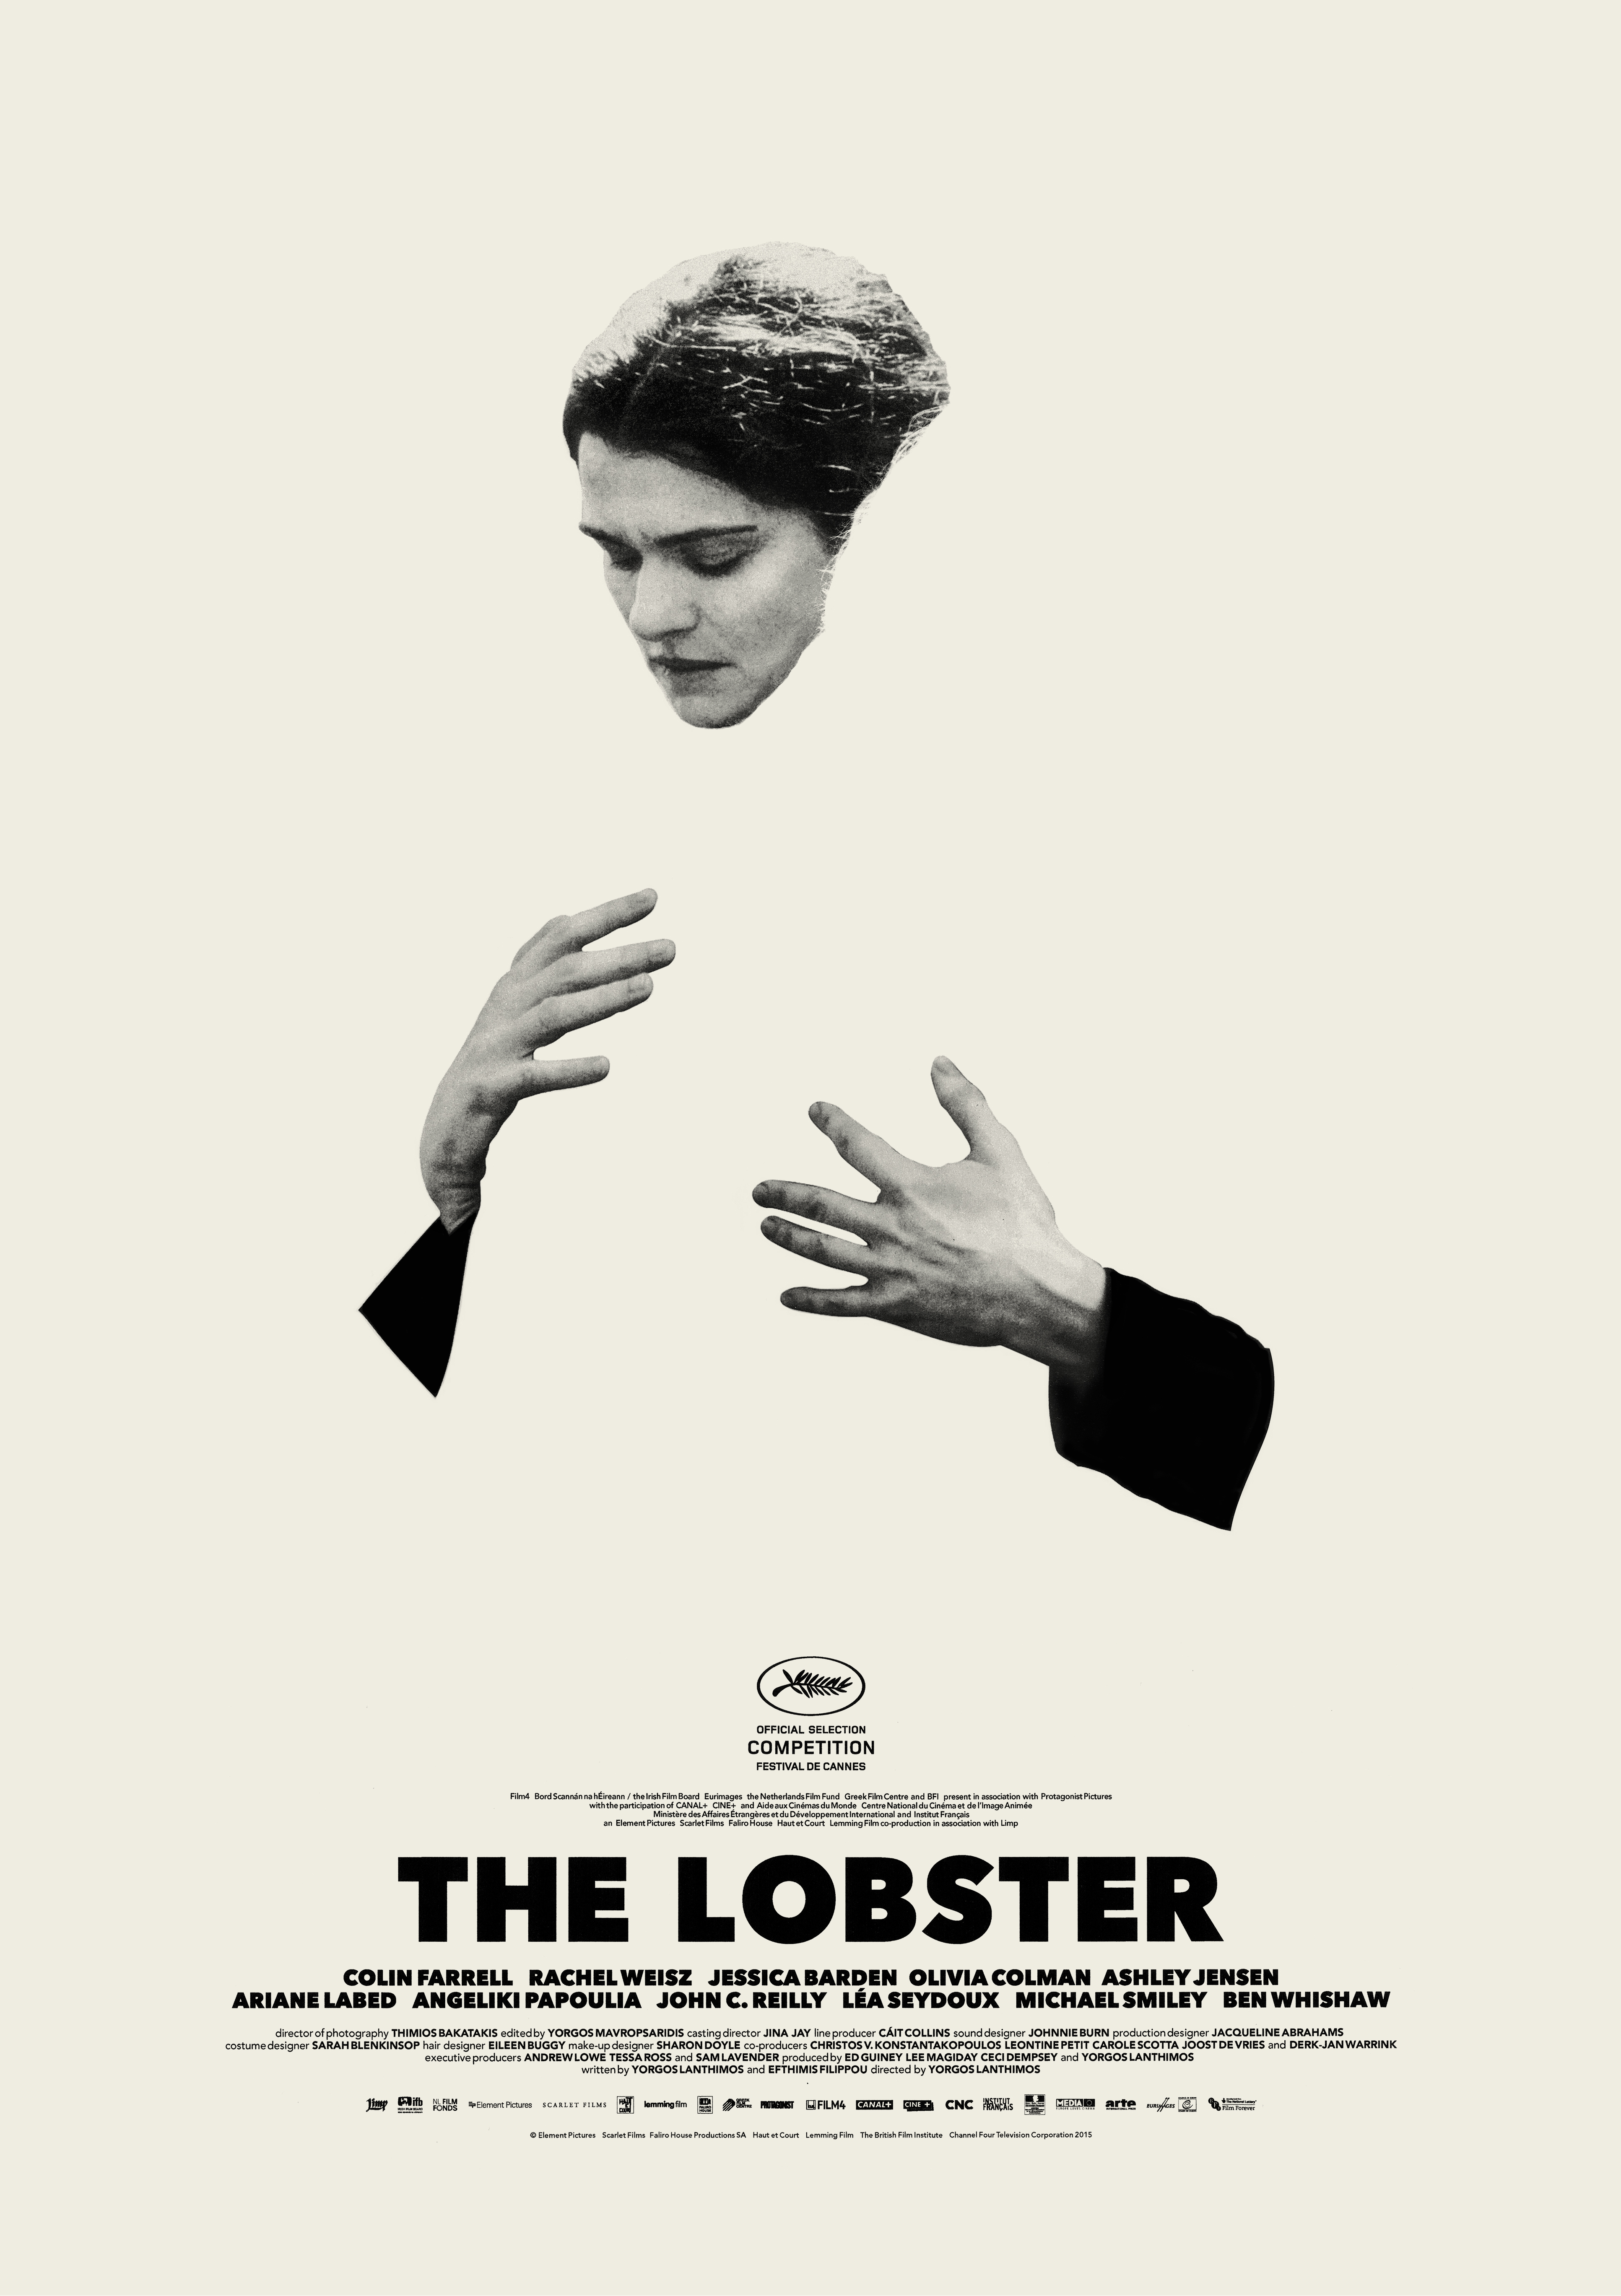 Stiahni si Filmy CZ/SK dabing Humr / The Lobster (2015)(CZ/EN)[1080p] = CSFD 67%